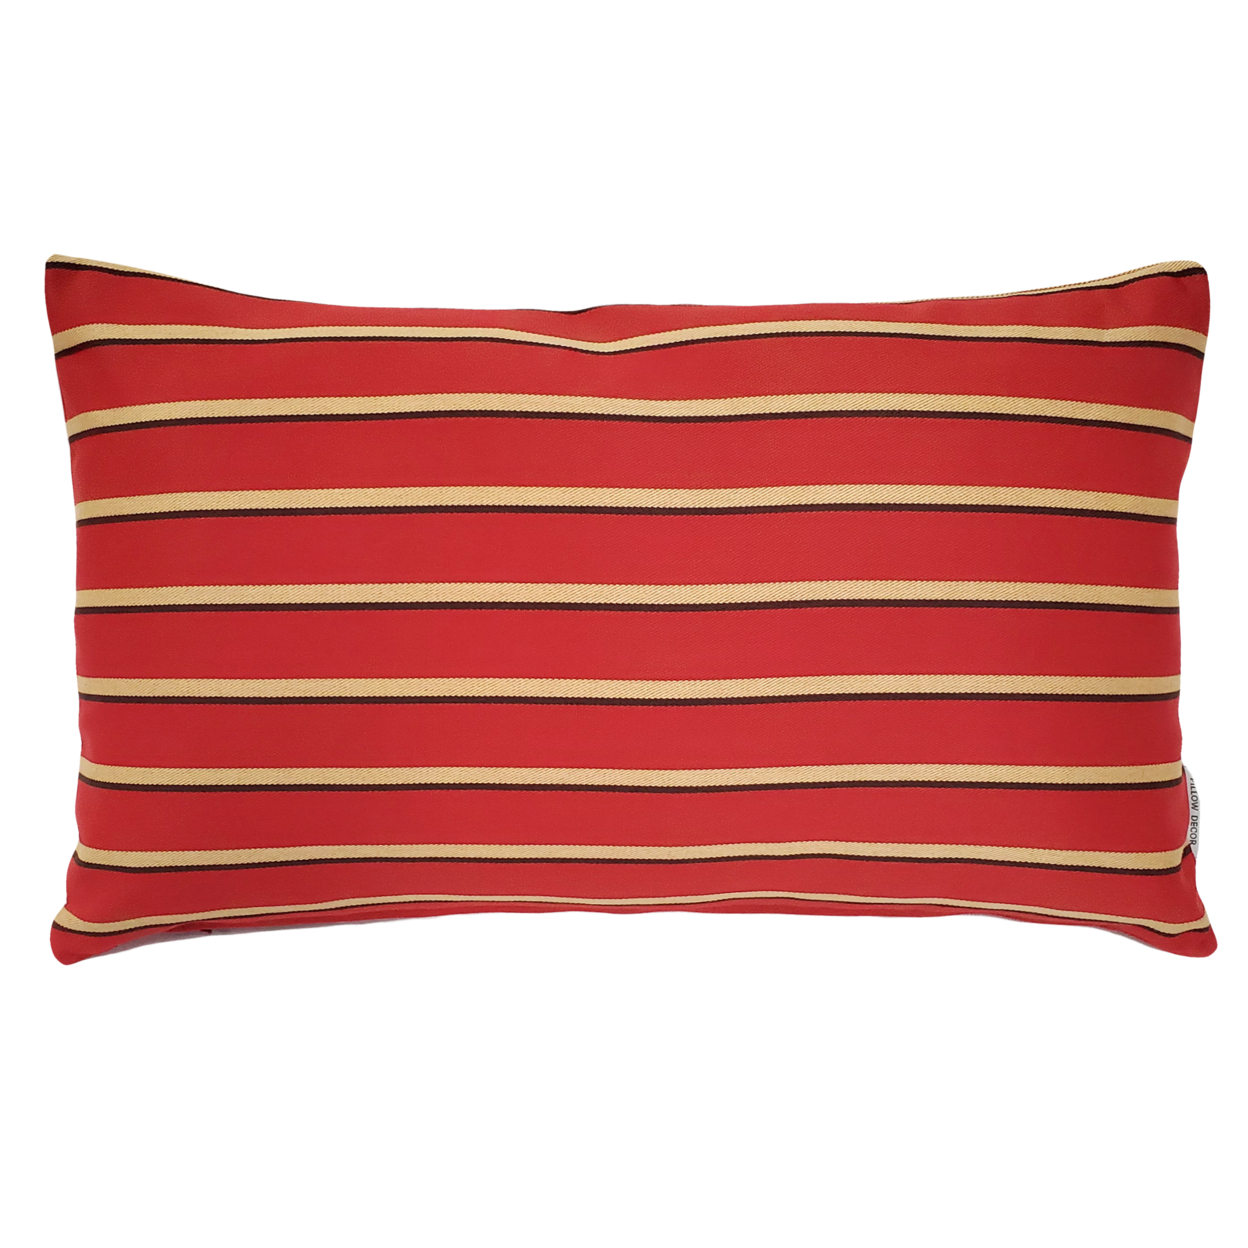 Sunbrella Harwood Crimson Outdoor Pillow 12x19, With Polyfill Insert